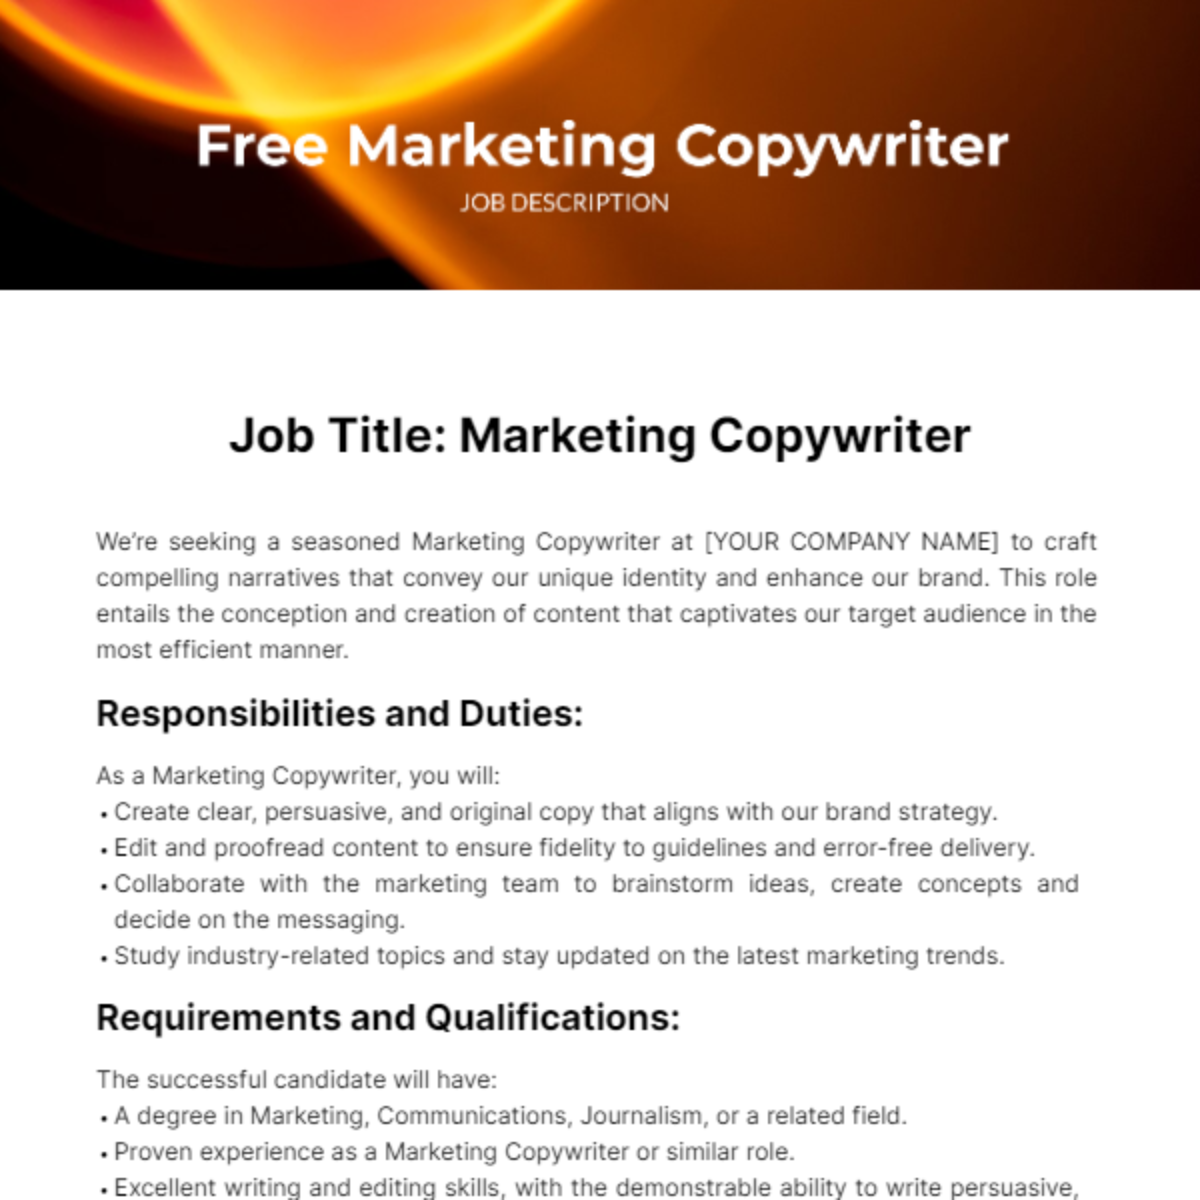 Free Marketing Copywriter Job Description Template